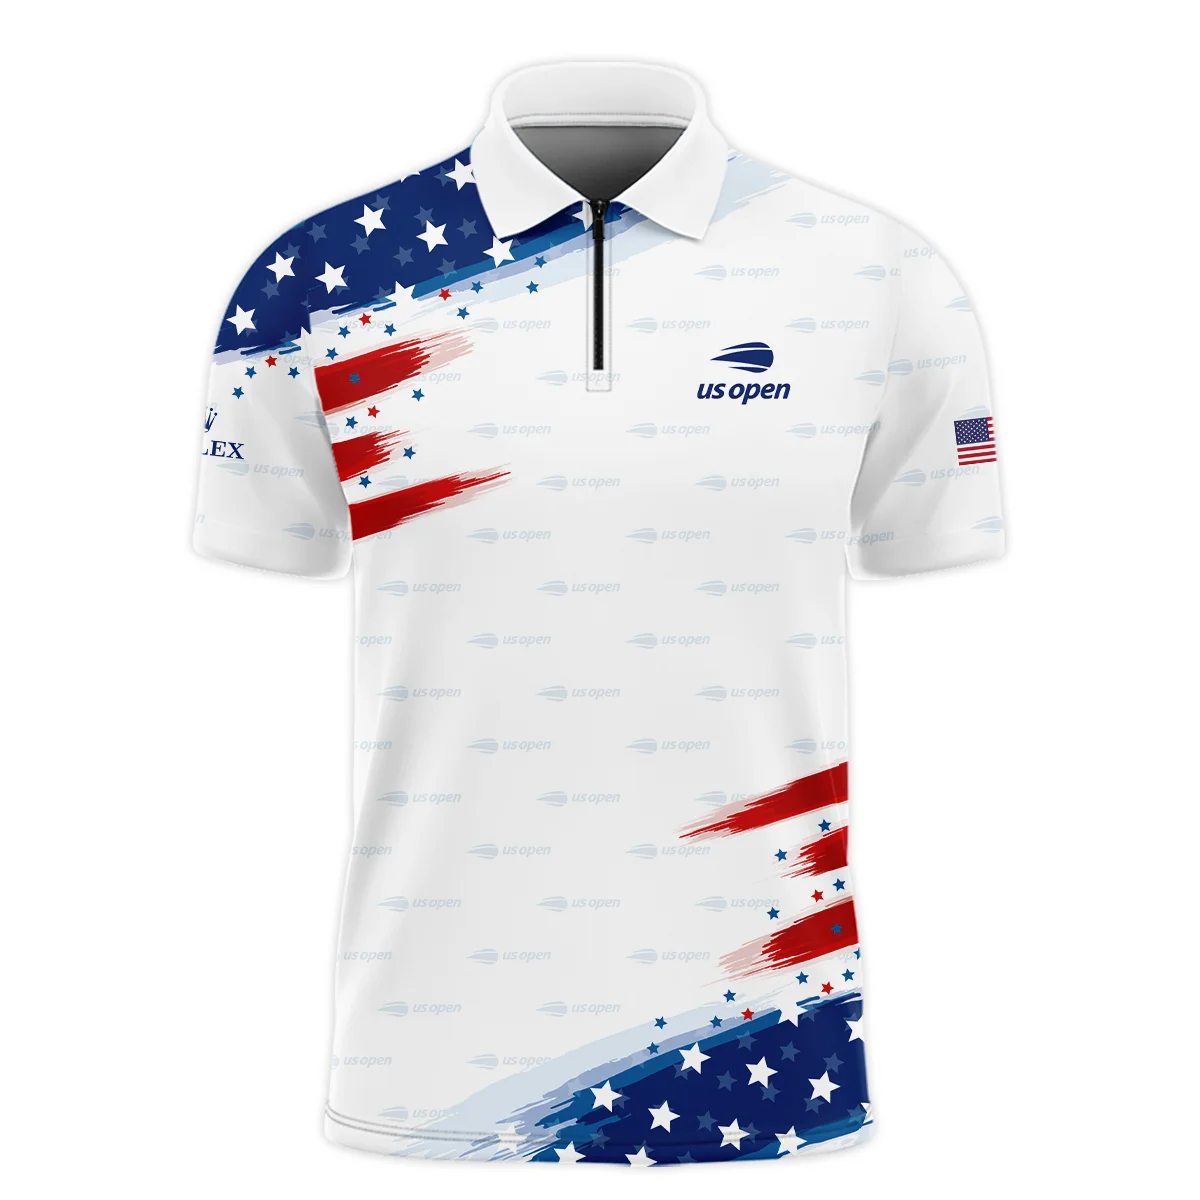 Tennis Love Sport Mix Color US Open Tennis Champions Rolex Vneck Polo Shirt Style Classic Polo Shirt For Men